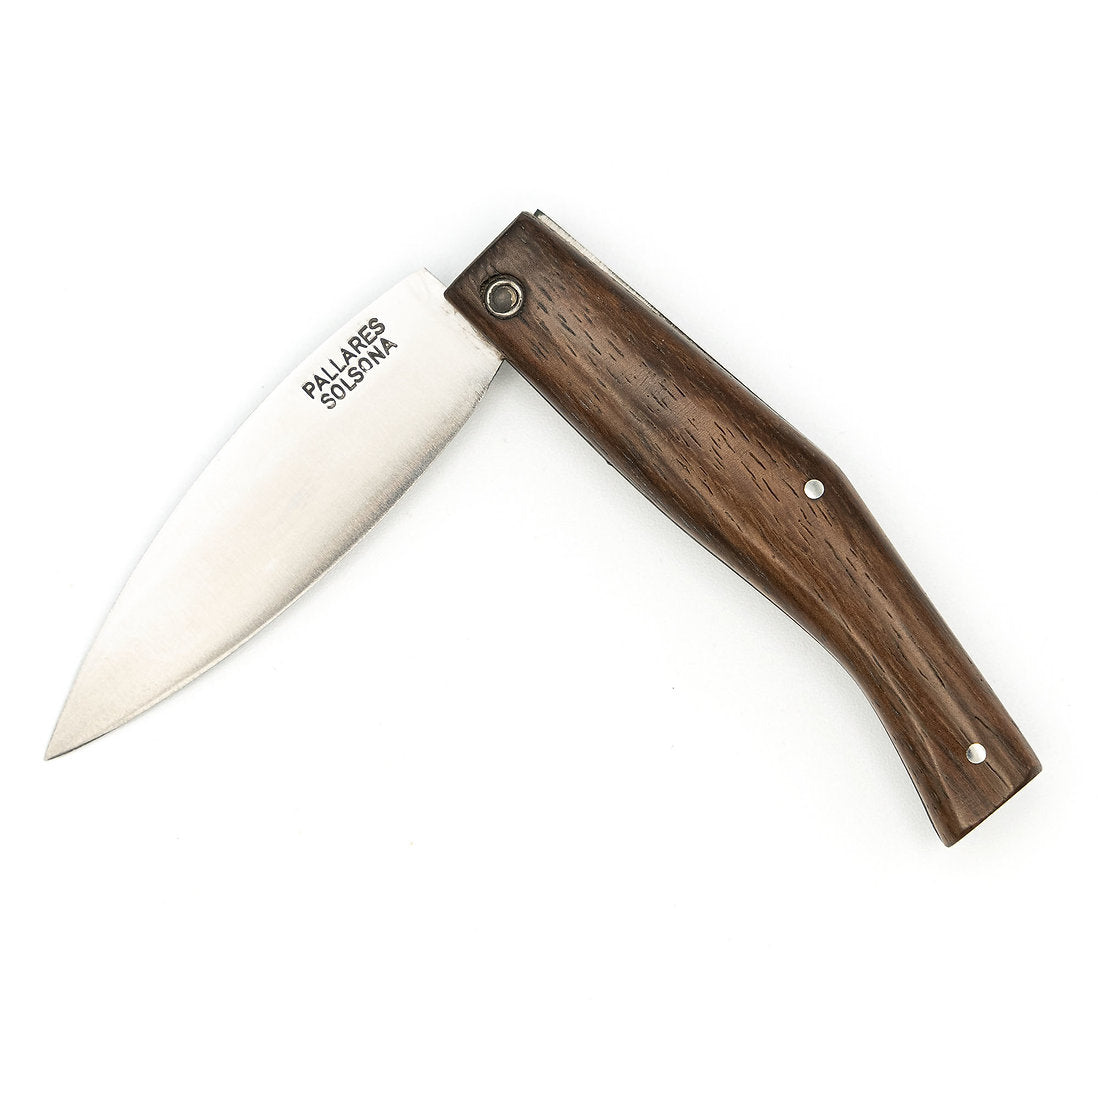 Busa Rosewood Handle Pocket Knife - Stainless Steel Blade